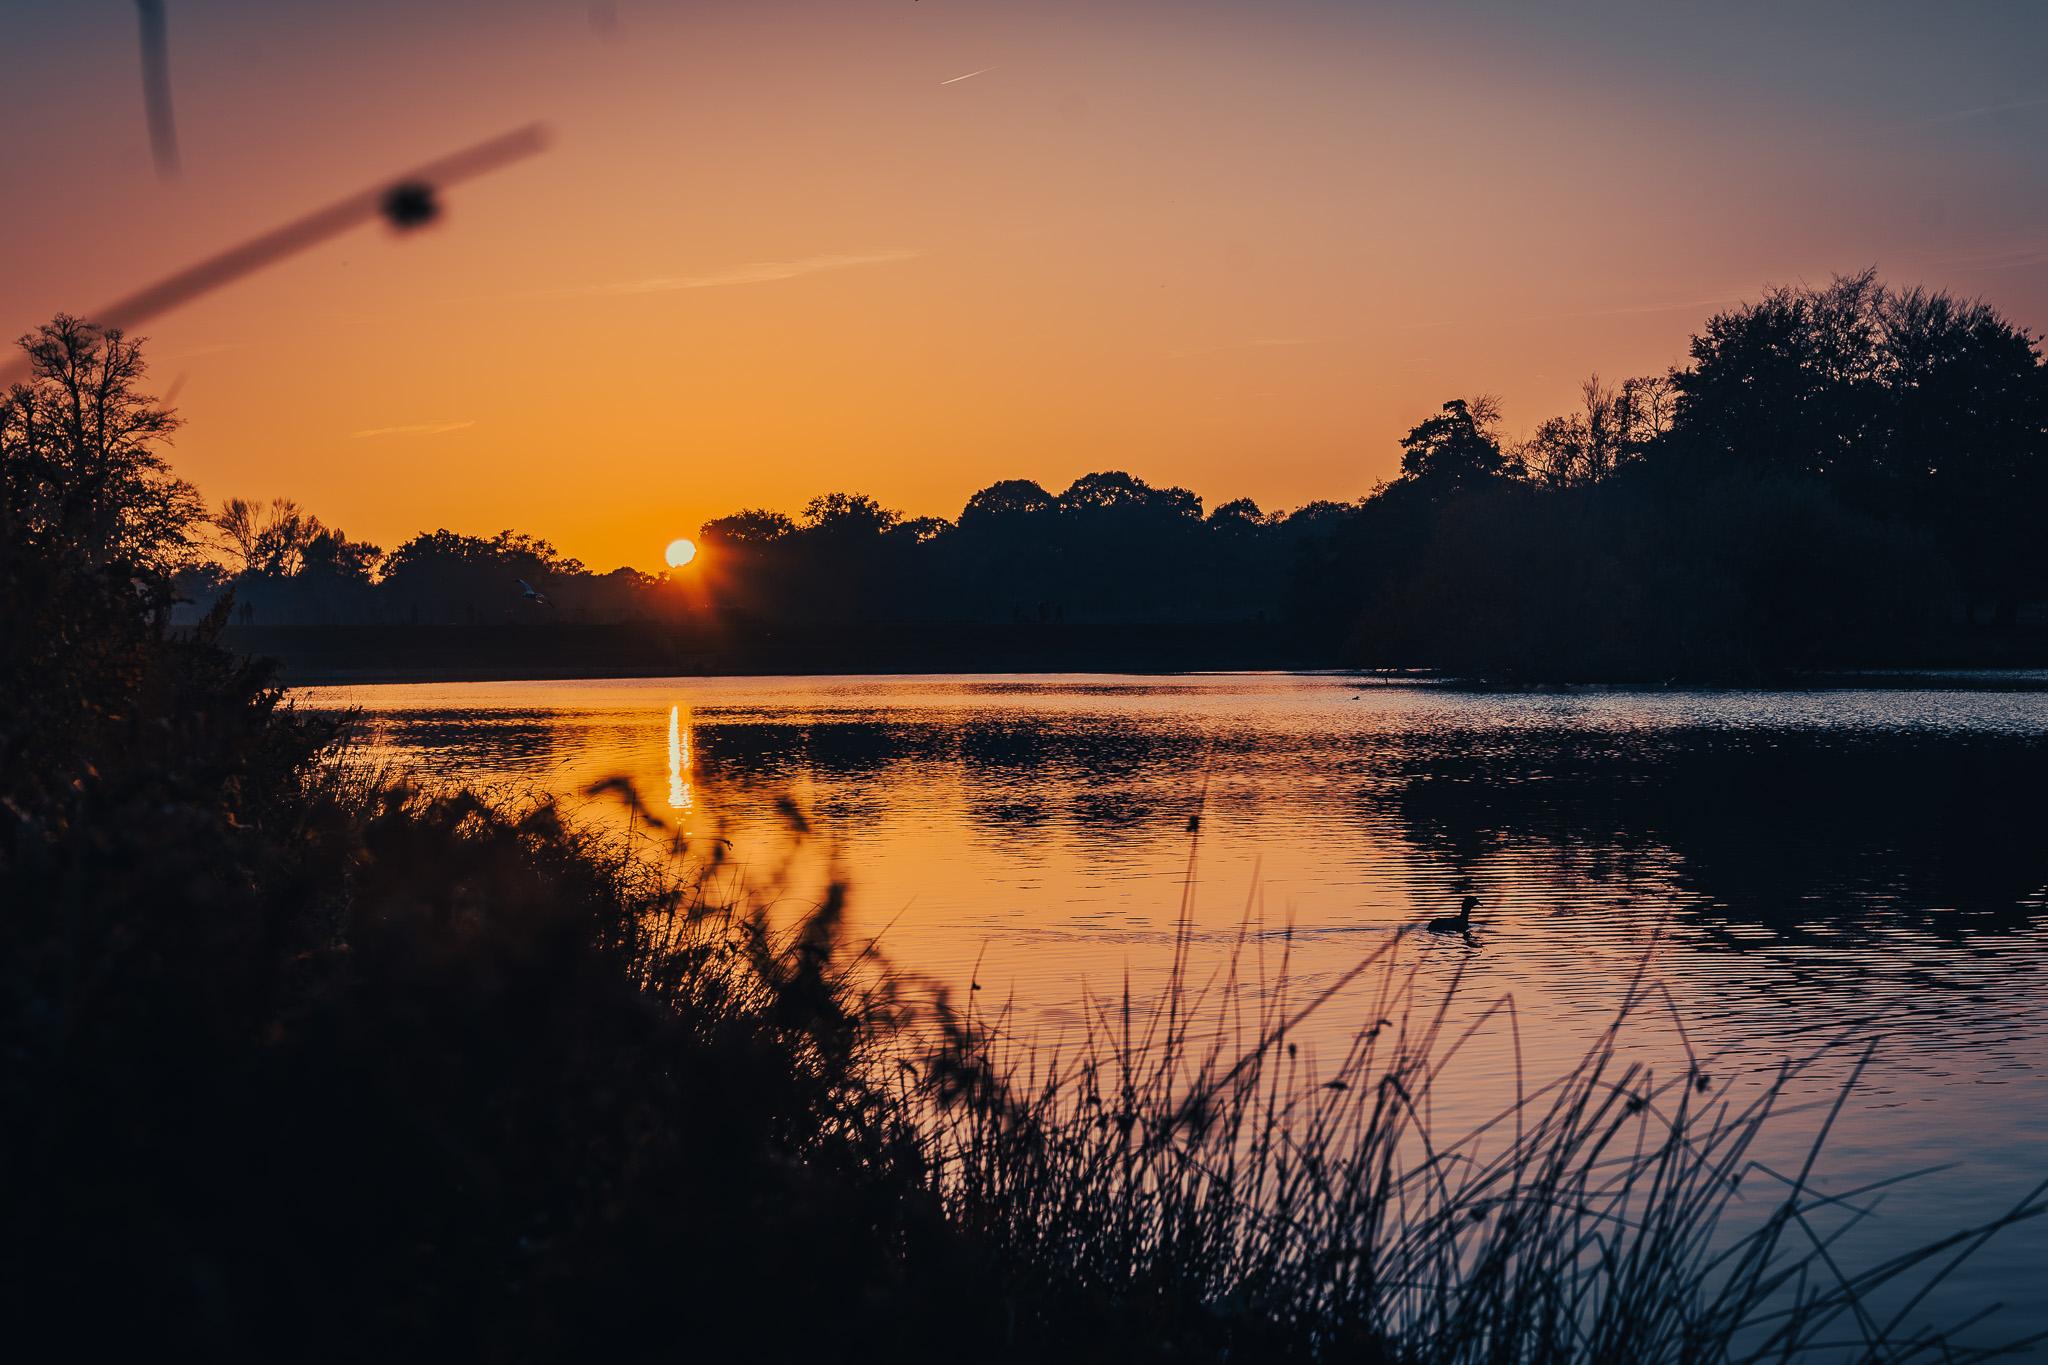 A sunset captured at Richmond Park, London, UK